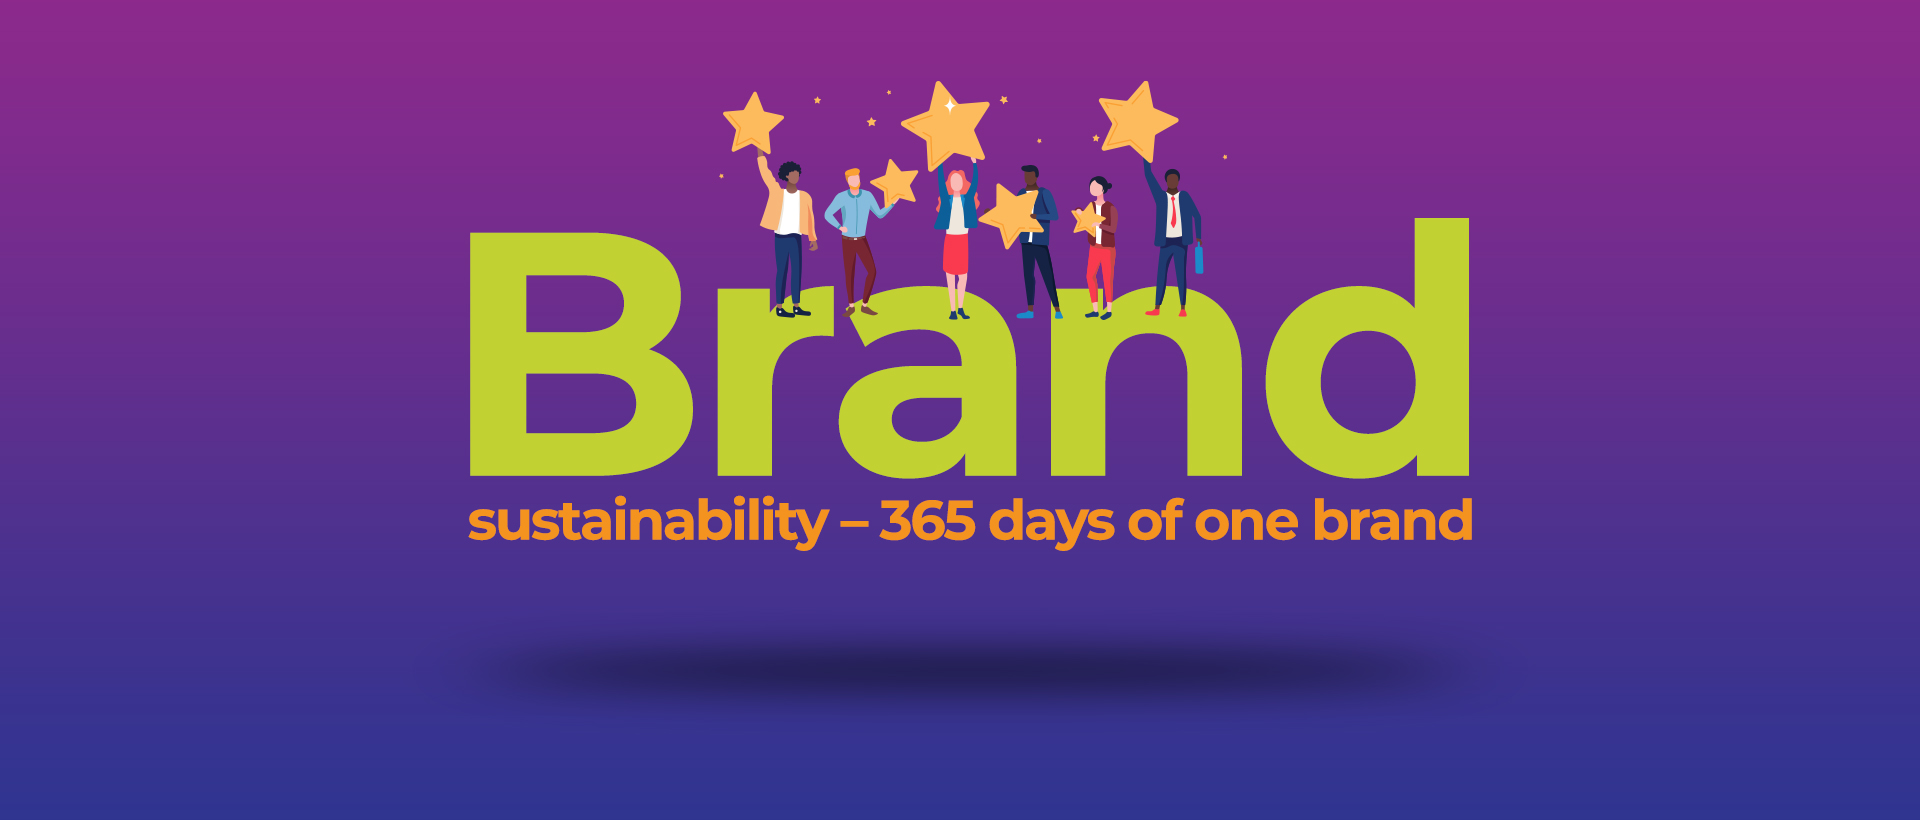 Brand sustainability – 365 days of one brand